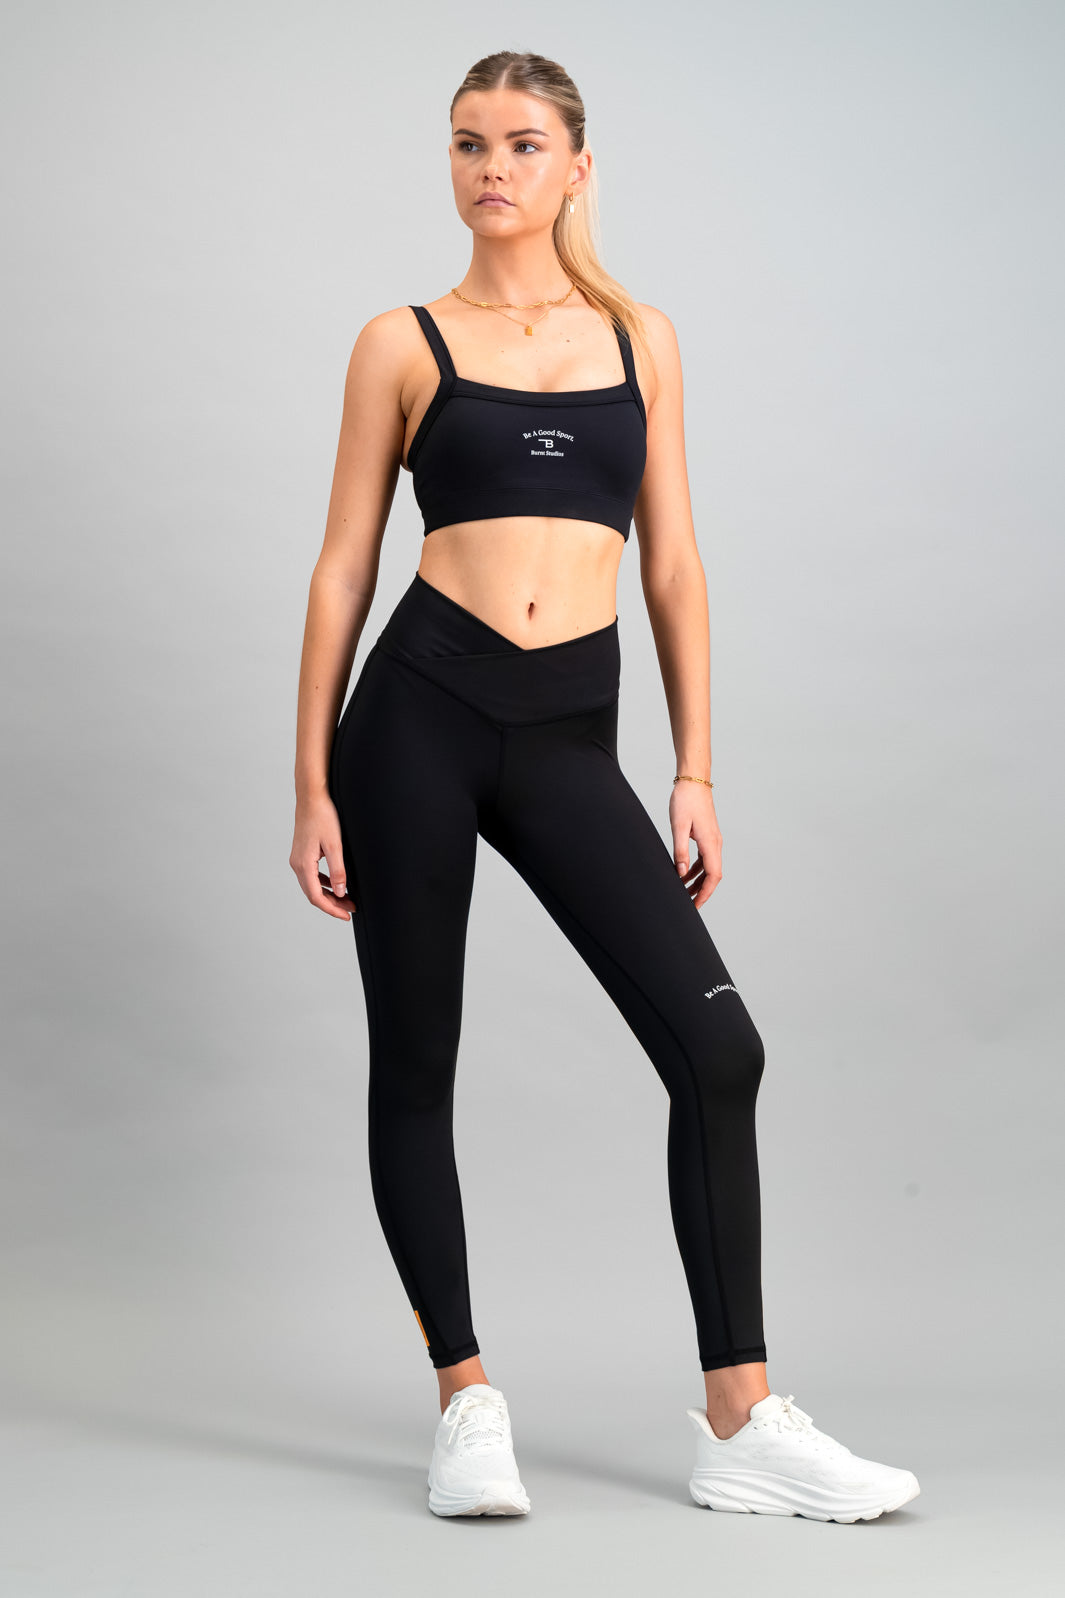 Women's Reflective Tights & Leggings. Nike LU